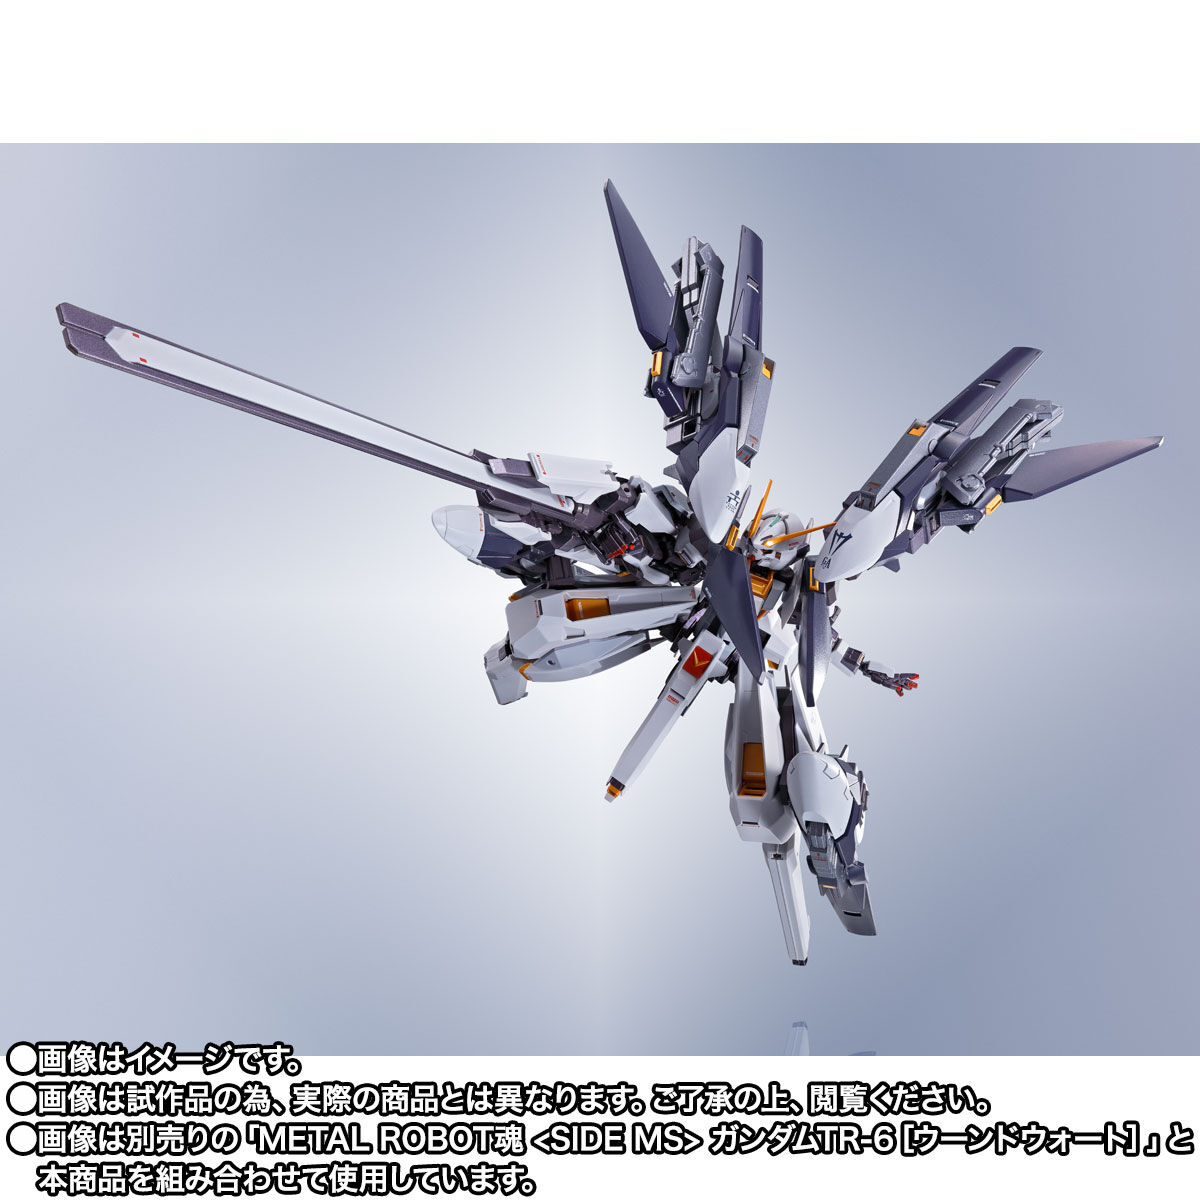 Metal Robot Spirits(Side MS) FF-X39A G-Parts[Hrududu Ⅱ] Parts set for RX-124 Gundam TR-6[Wondwart]